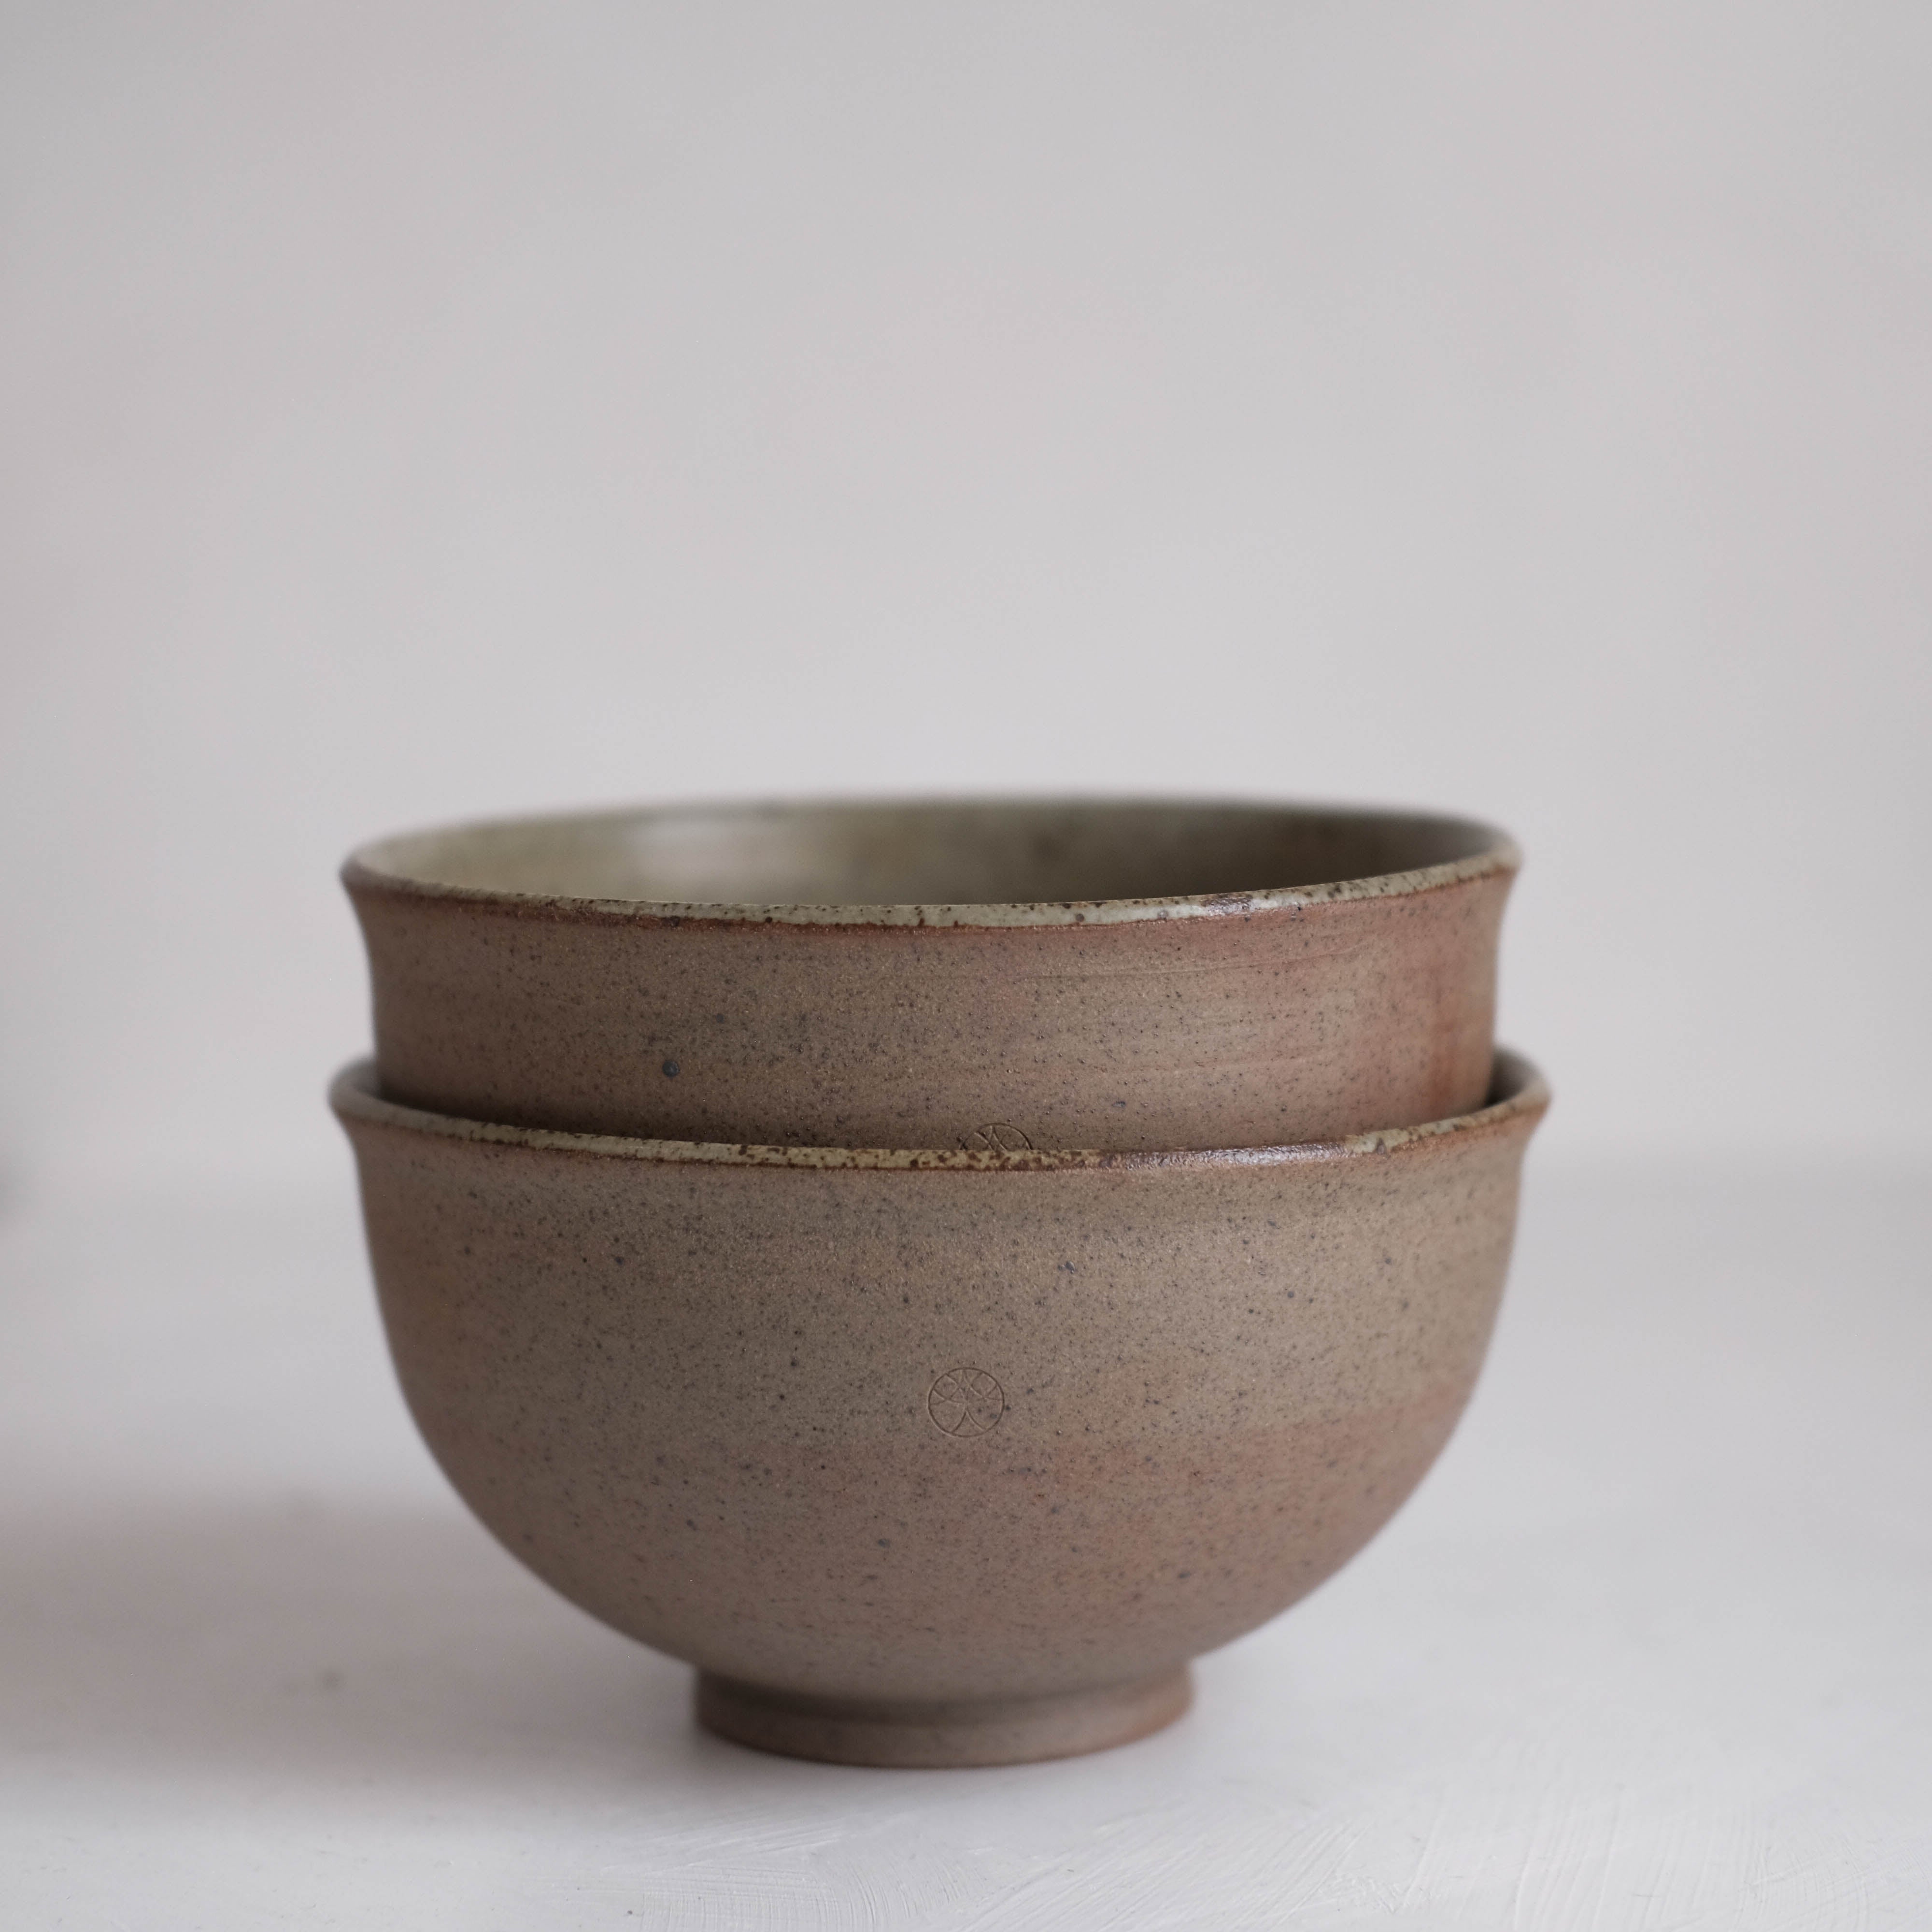 Haigusuri (灰釉) Bowl #ADN107 (Set of 2)